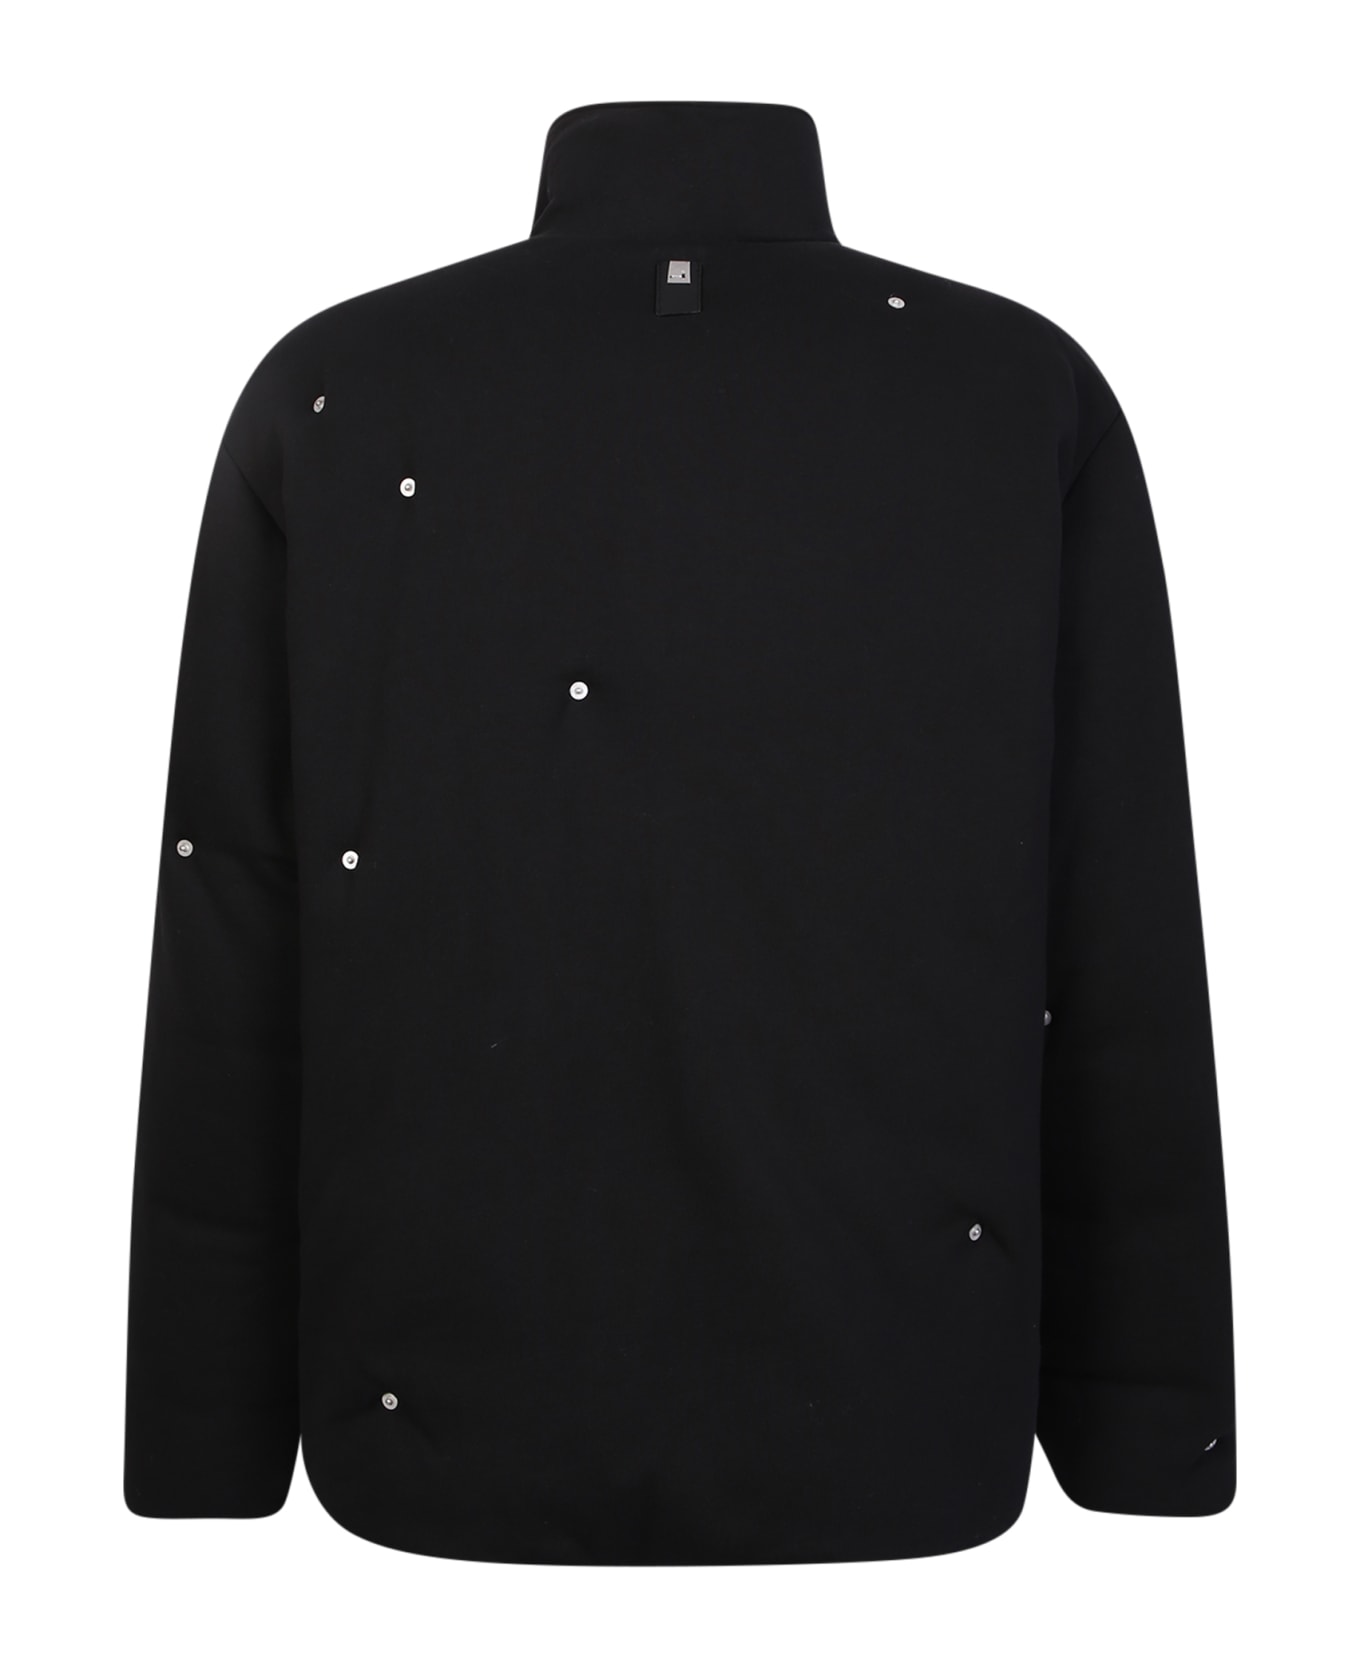 1017 ALYX 9SM Black Fleece Down Jacket With Buttons - Black ダウンジャケット